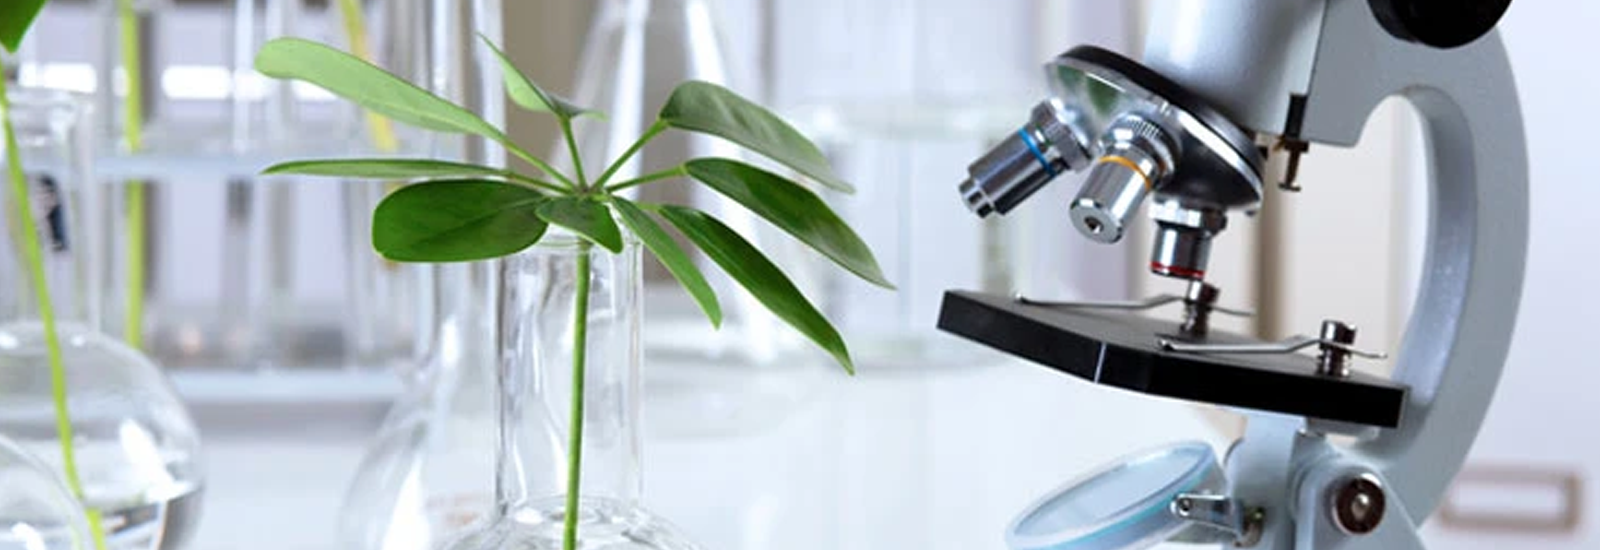 Microscope with herb - Formulating a Herbal Drug - The Himalaya Drug Company